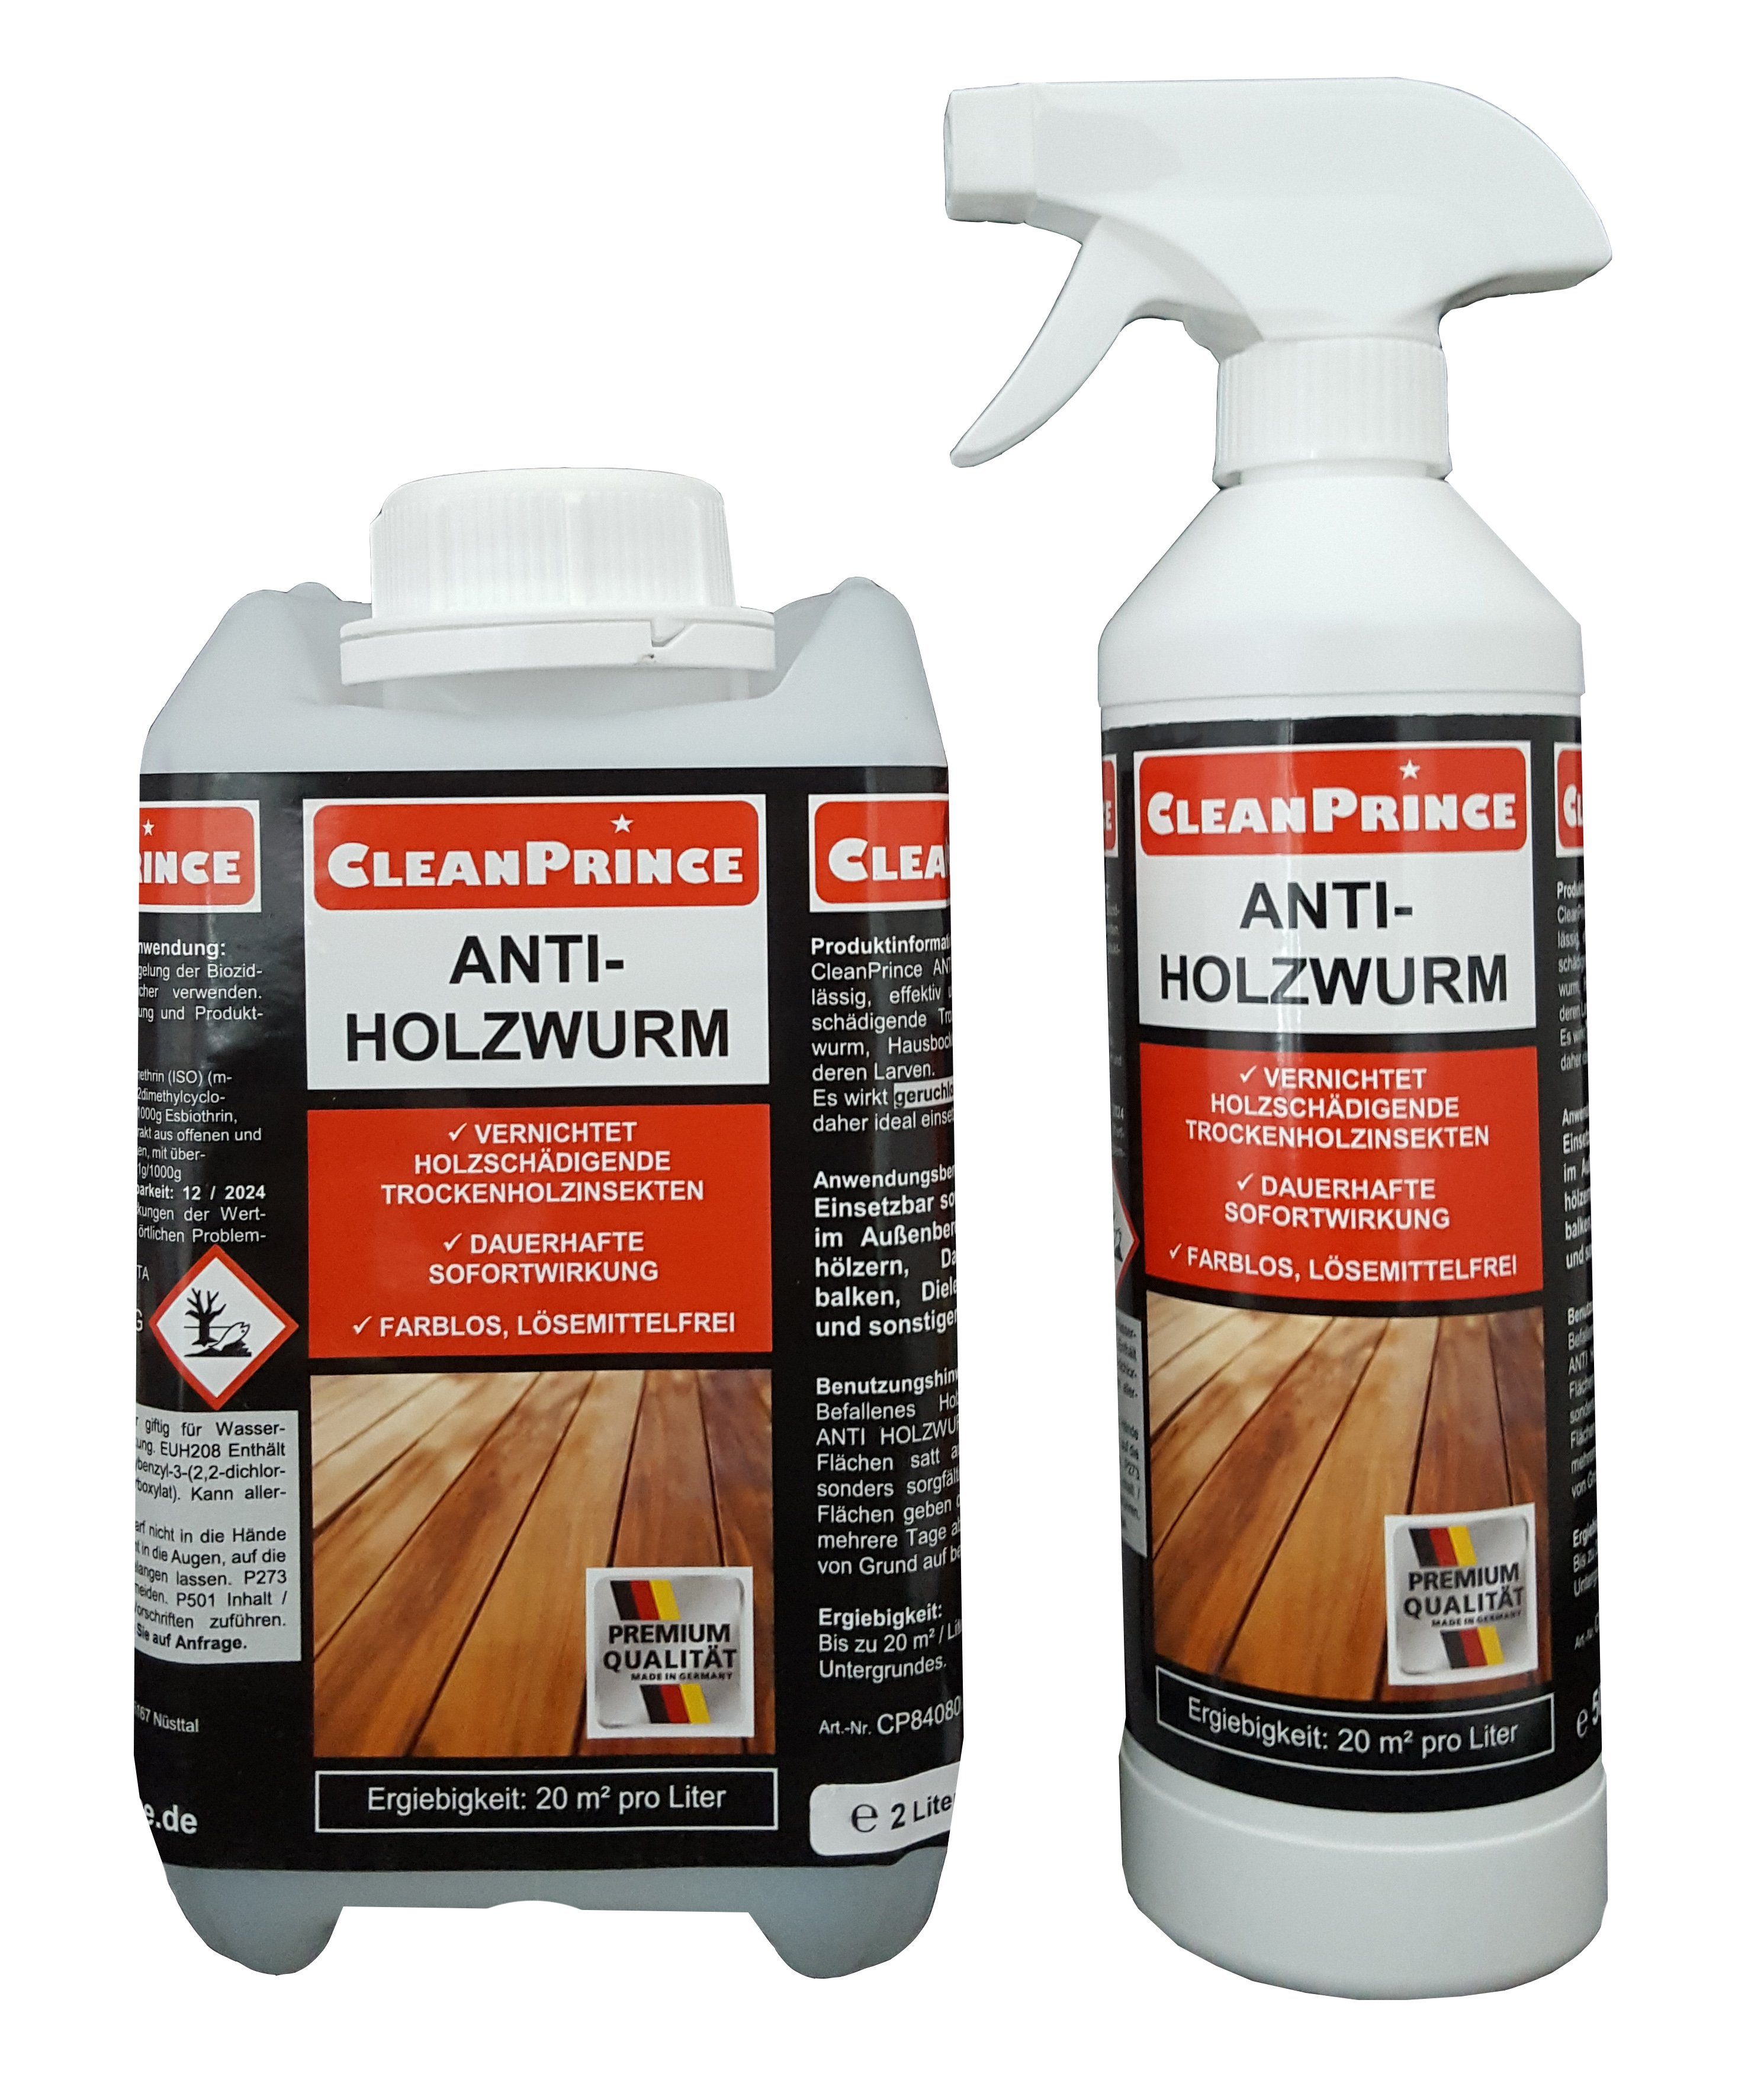 CleanPrince Holzwurm-Ex Anti Holzwurm Spray Holzwurm-Ex Holzfliegen